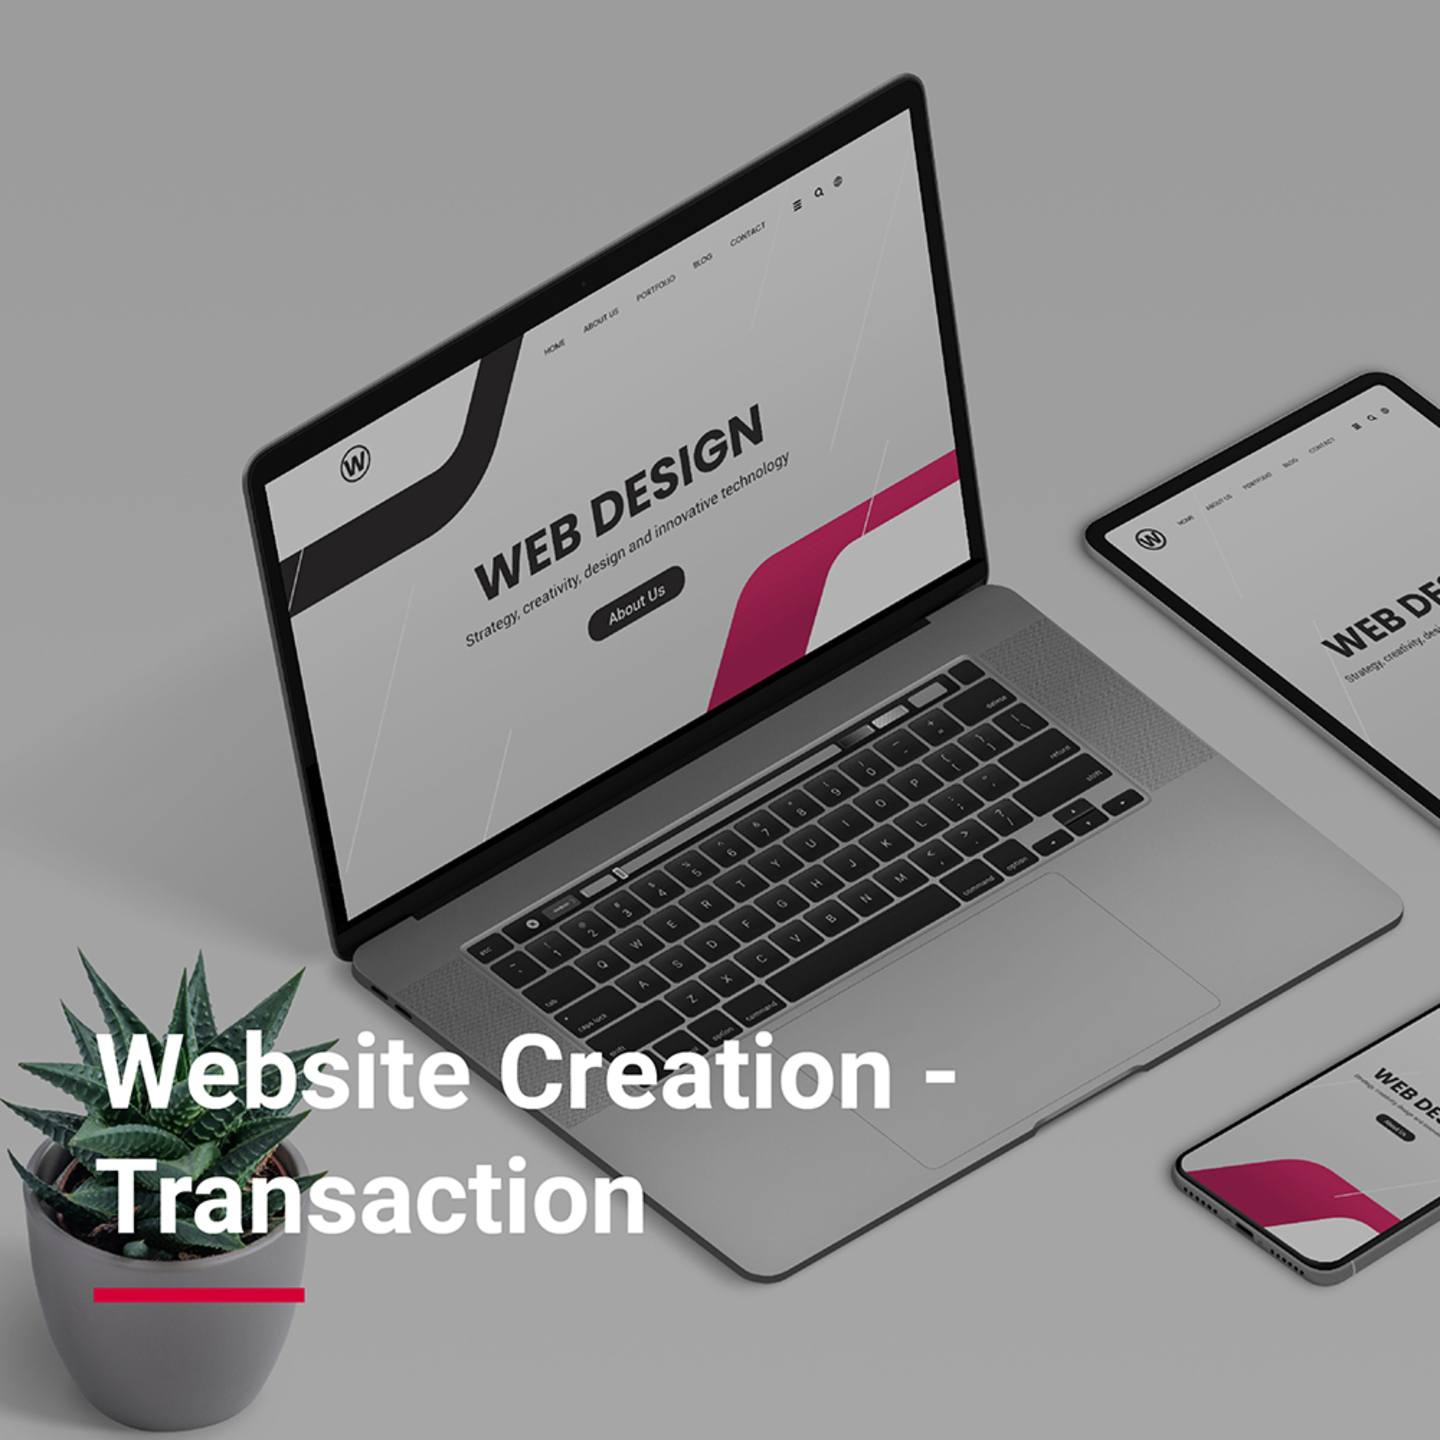 Website Creation - Transaction